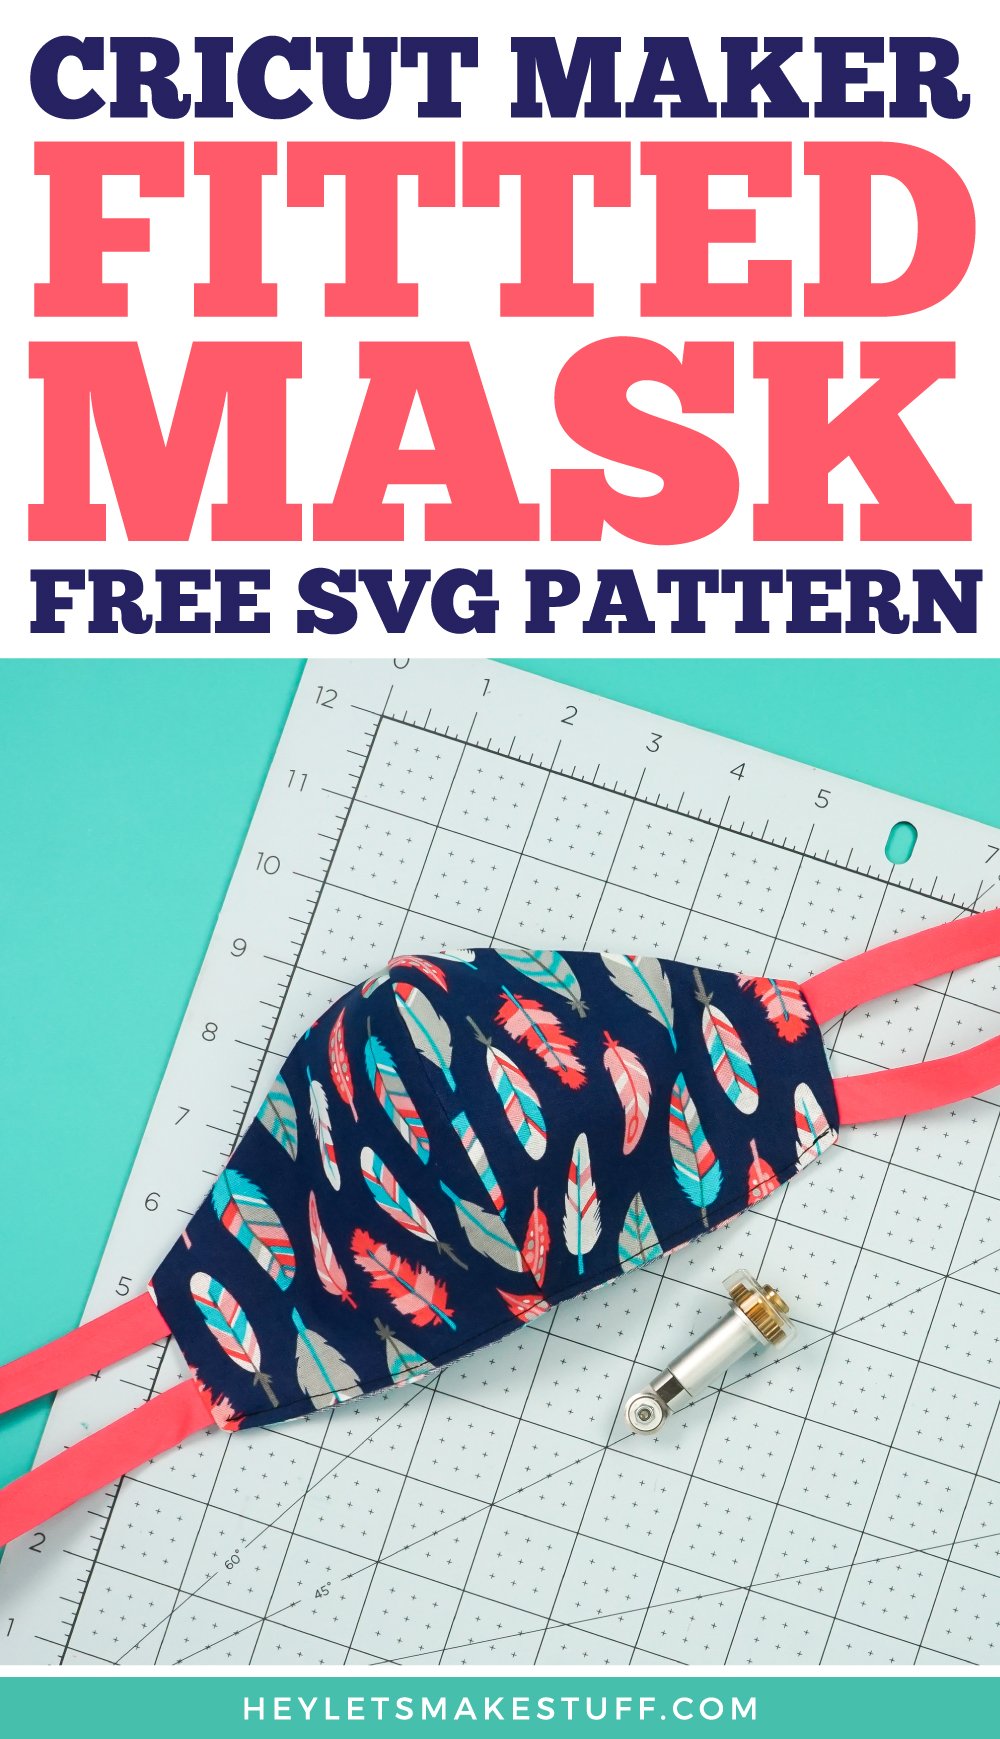 Fitted Mask SVG Pattern for Cricut Maker - Hey, Let's Make Stuff